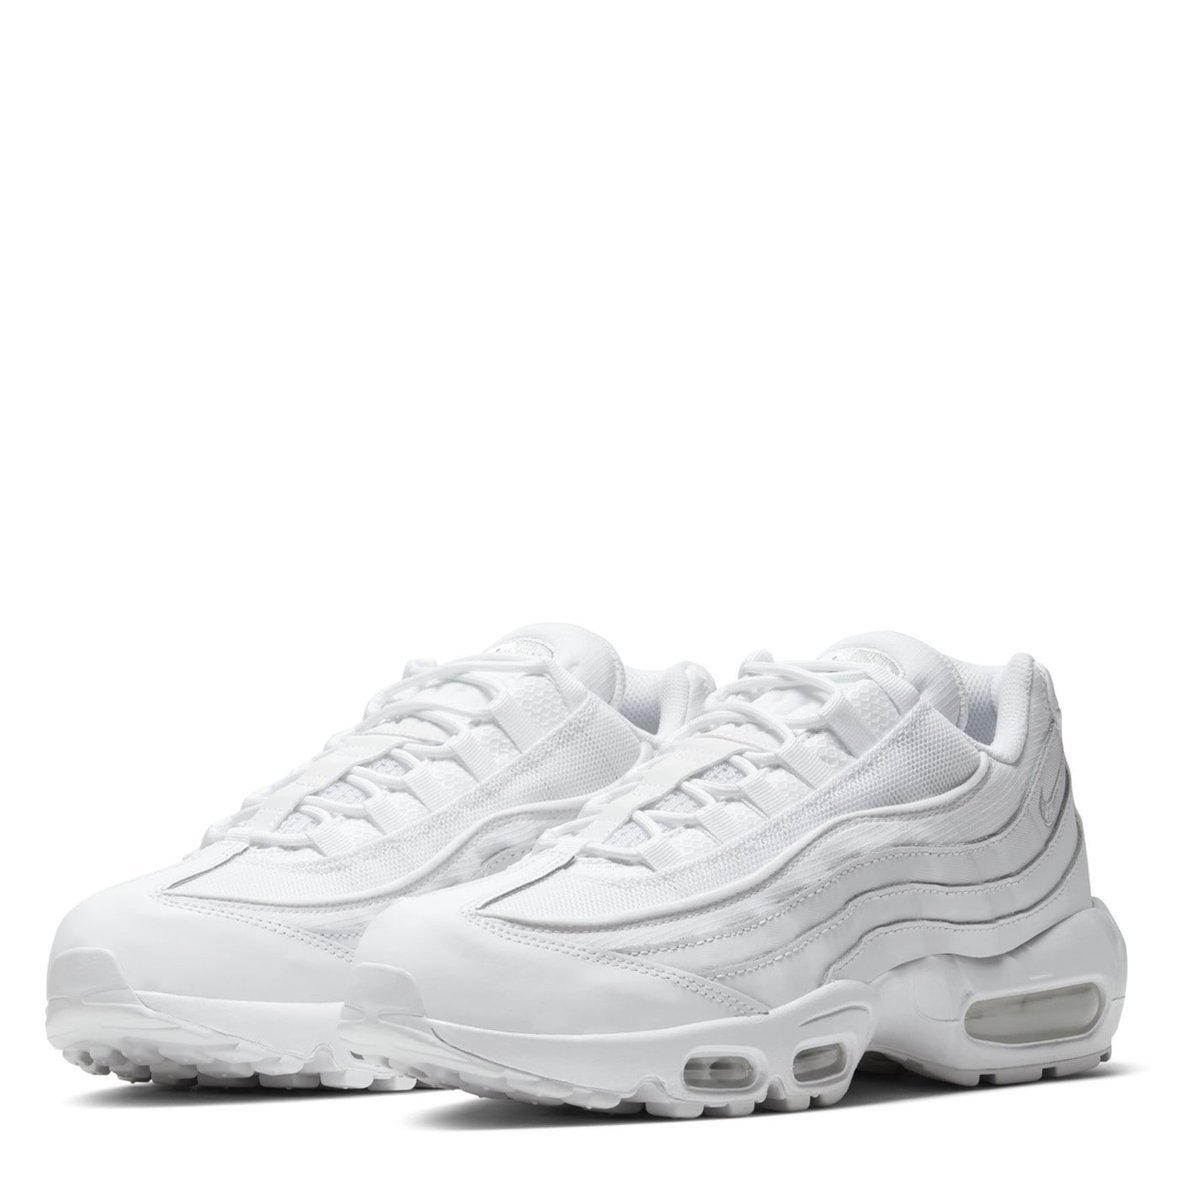 Nike Air Max 95 Essential Shoes Mens White/White, £170.00